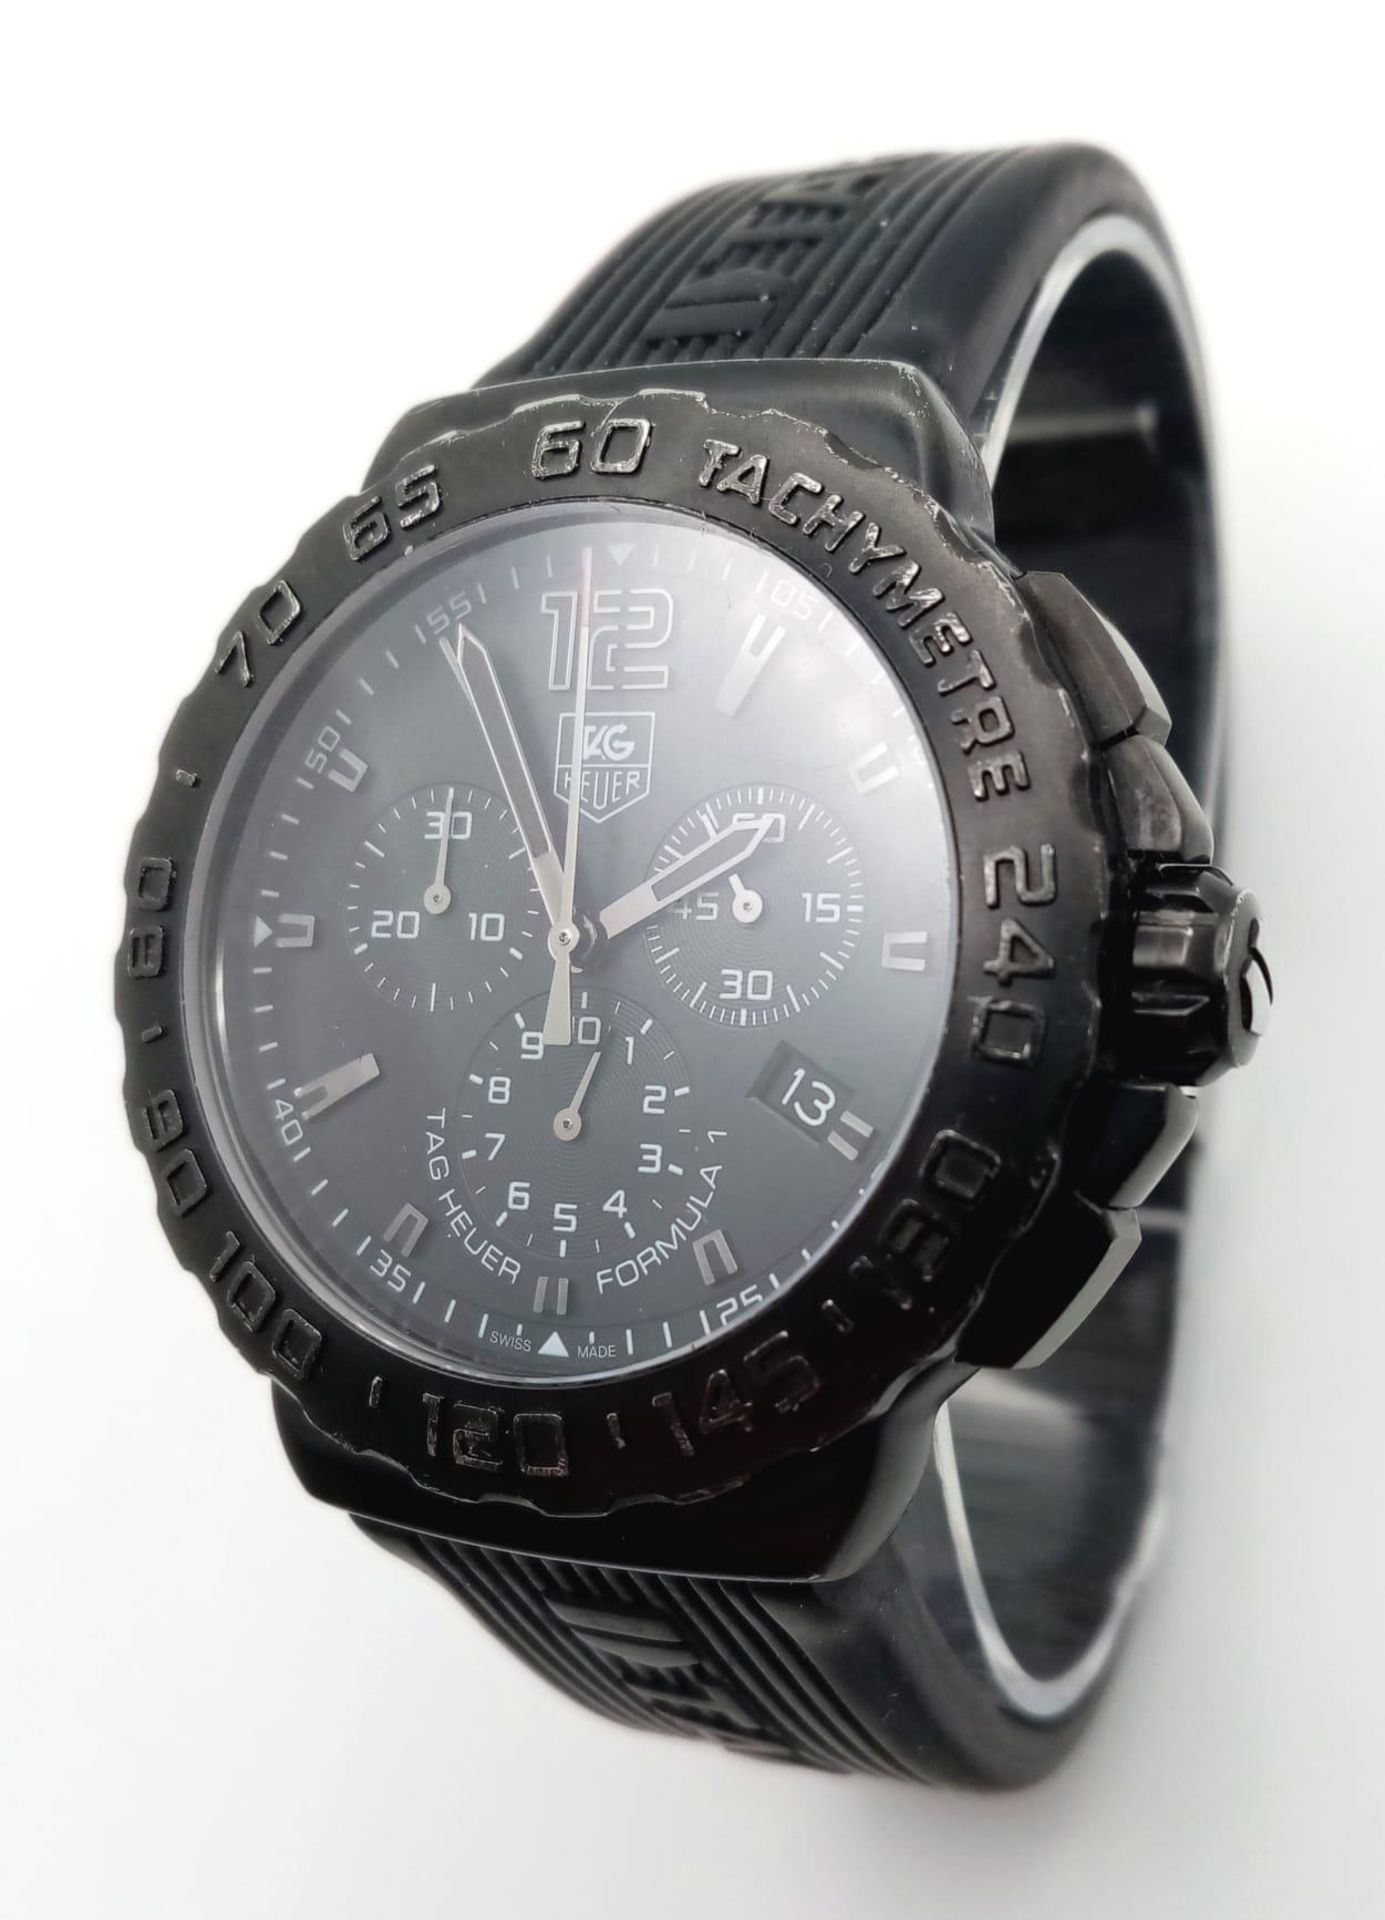 A Tag Heuer Formula 1 Chronograph Gents Quartz Watch. Black Tag rubber strap. Black dial with